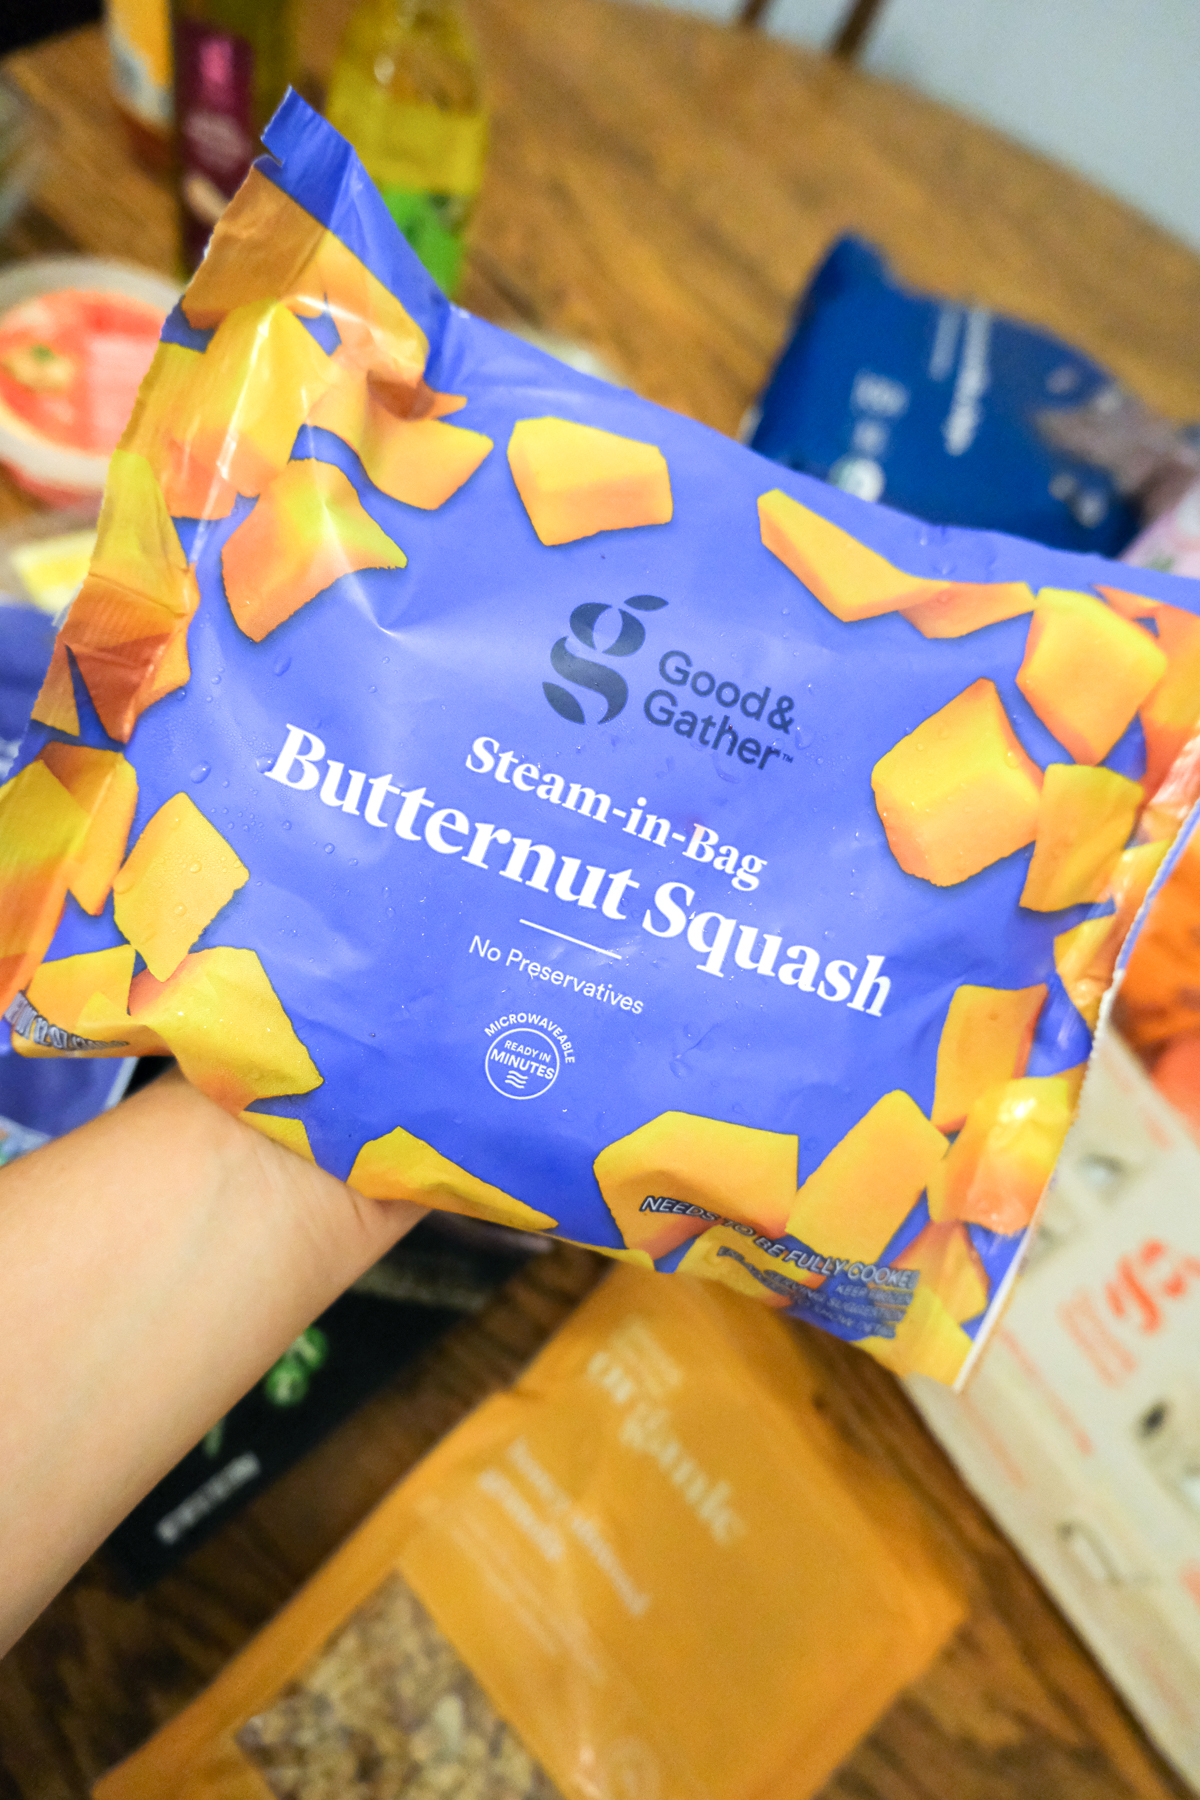 frozen butternut squash Good & Gather from Target